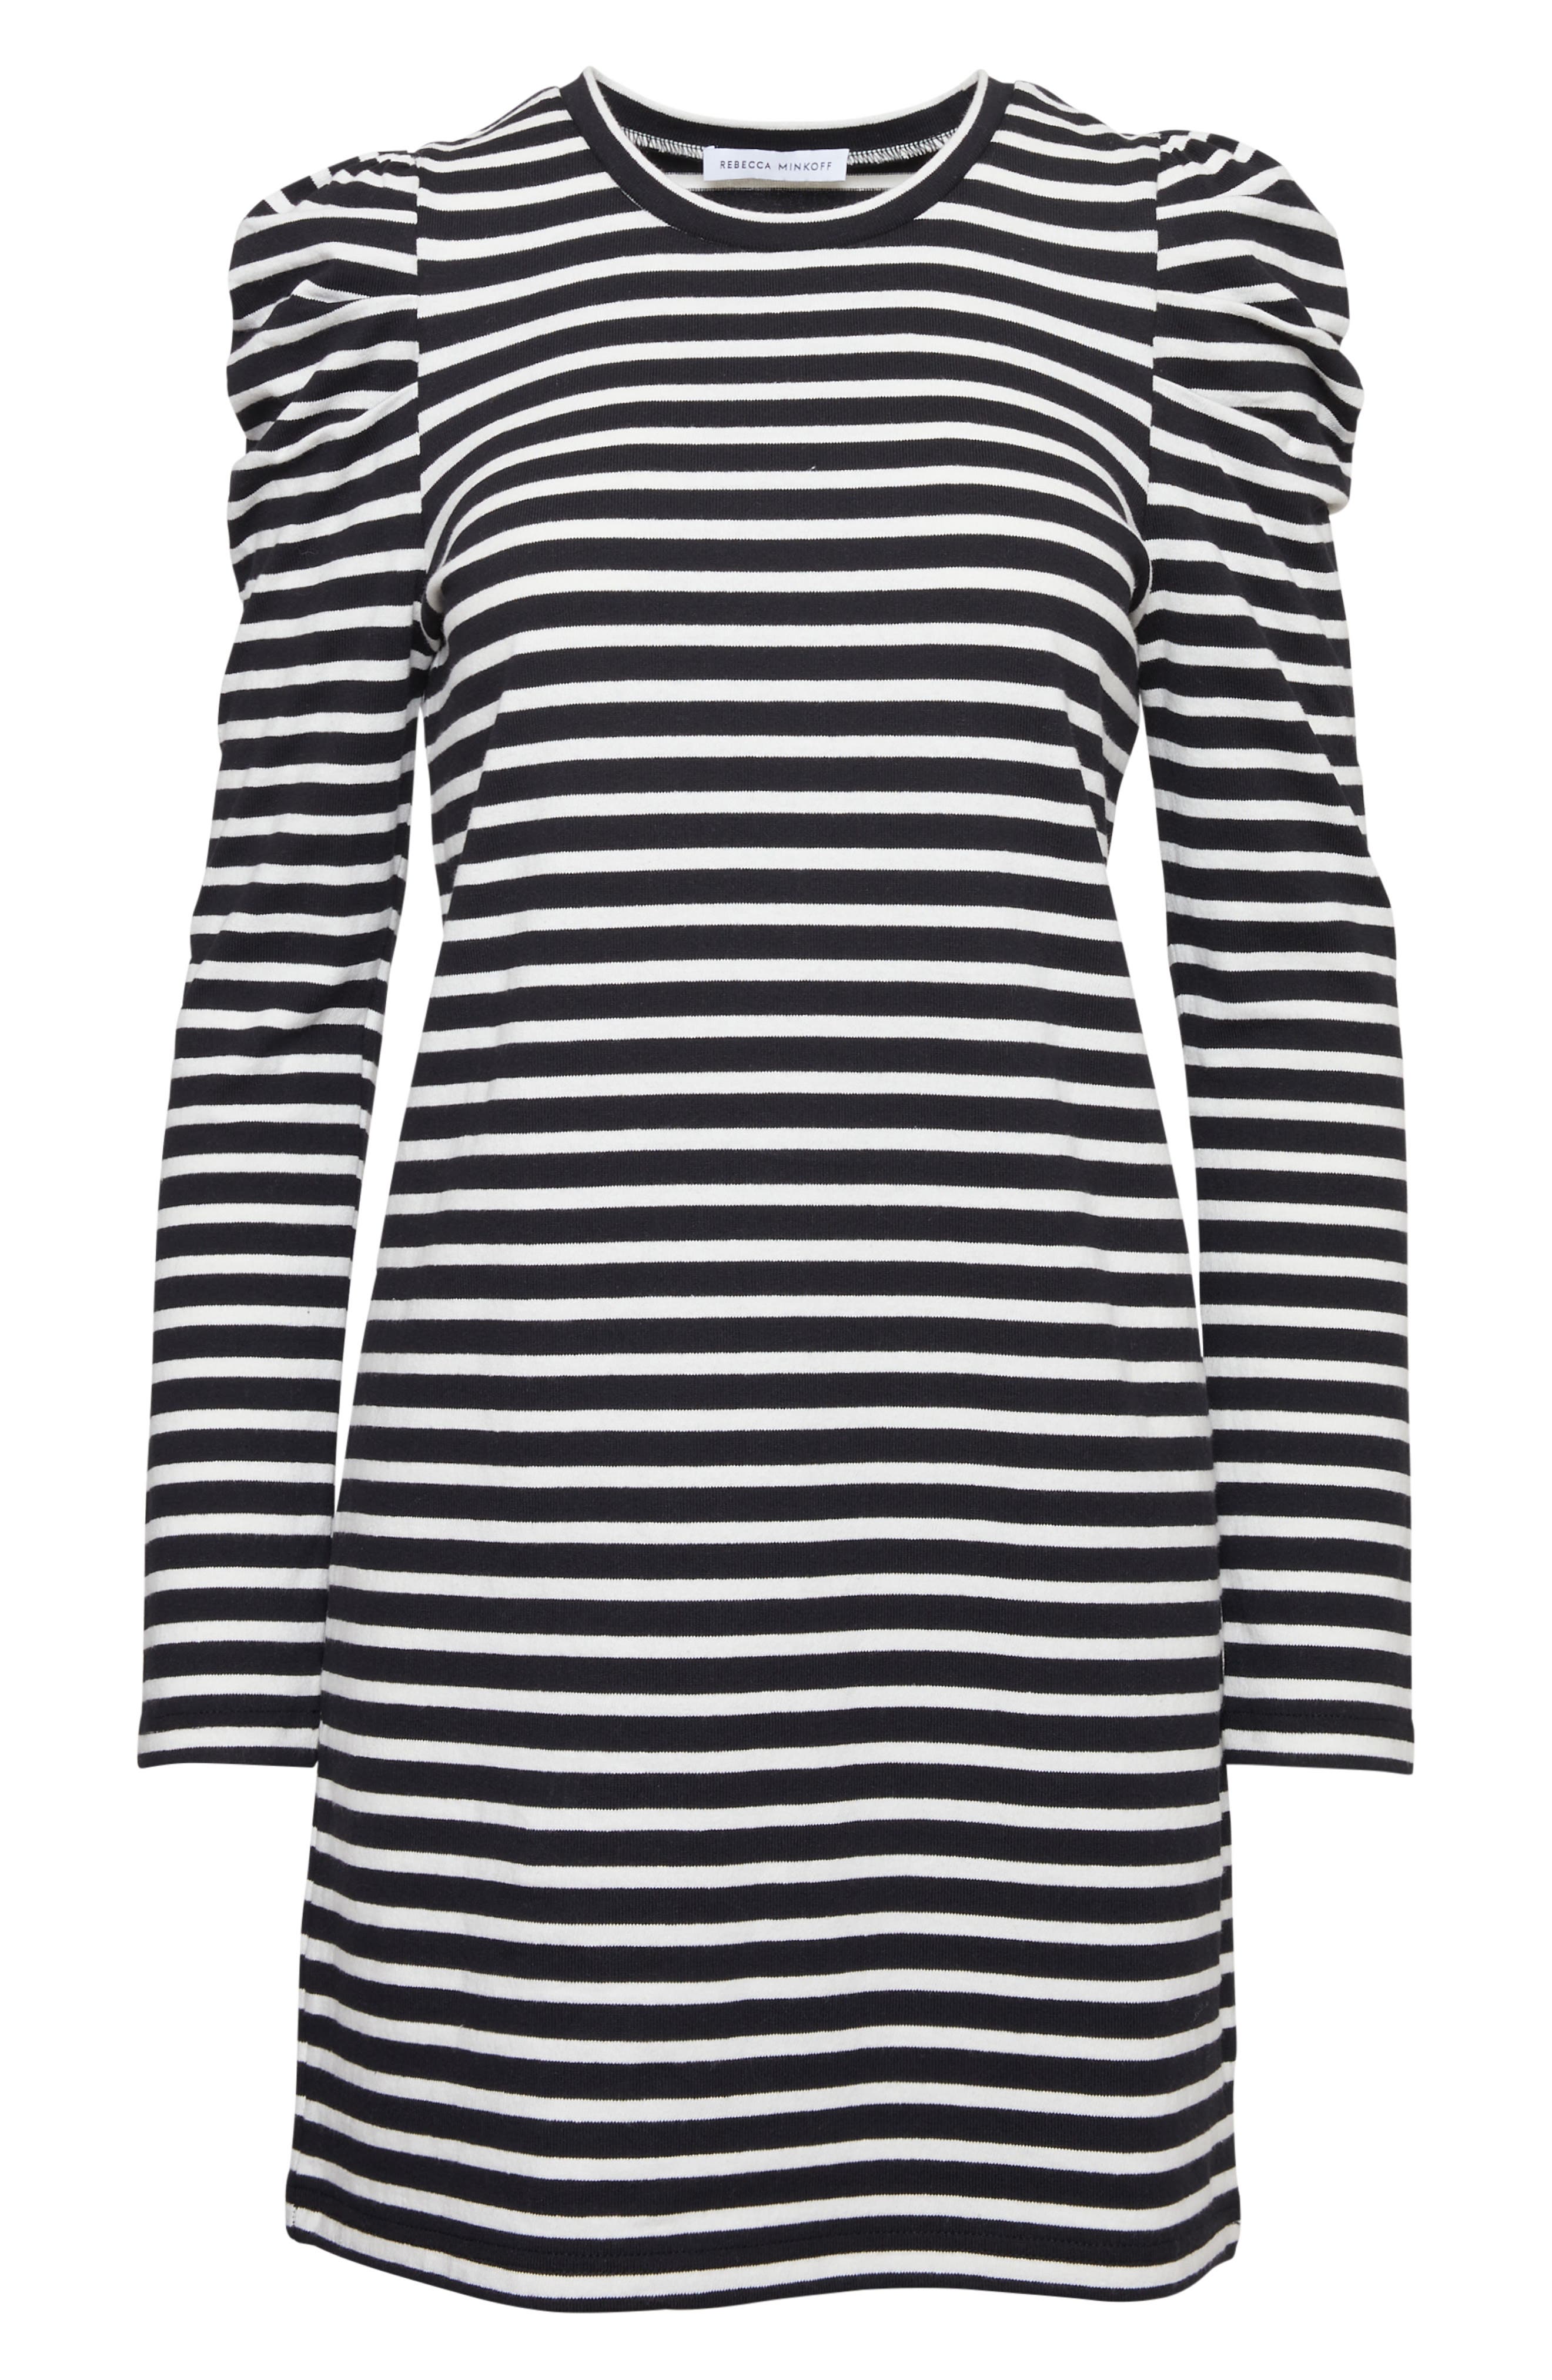 Rebecca Minkoff Talia Stripe Long Sleeve Cotton Minidress in Black/Ecru Stripe at Nordstrom, Size Xx-Large